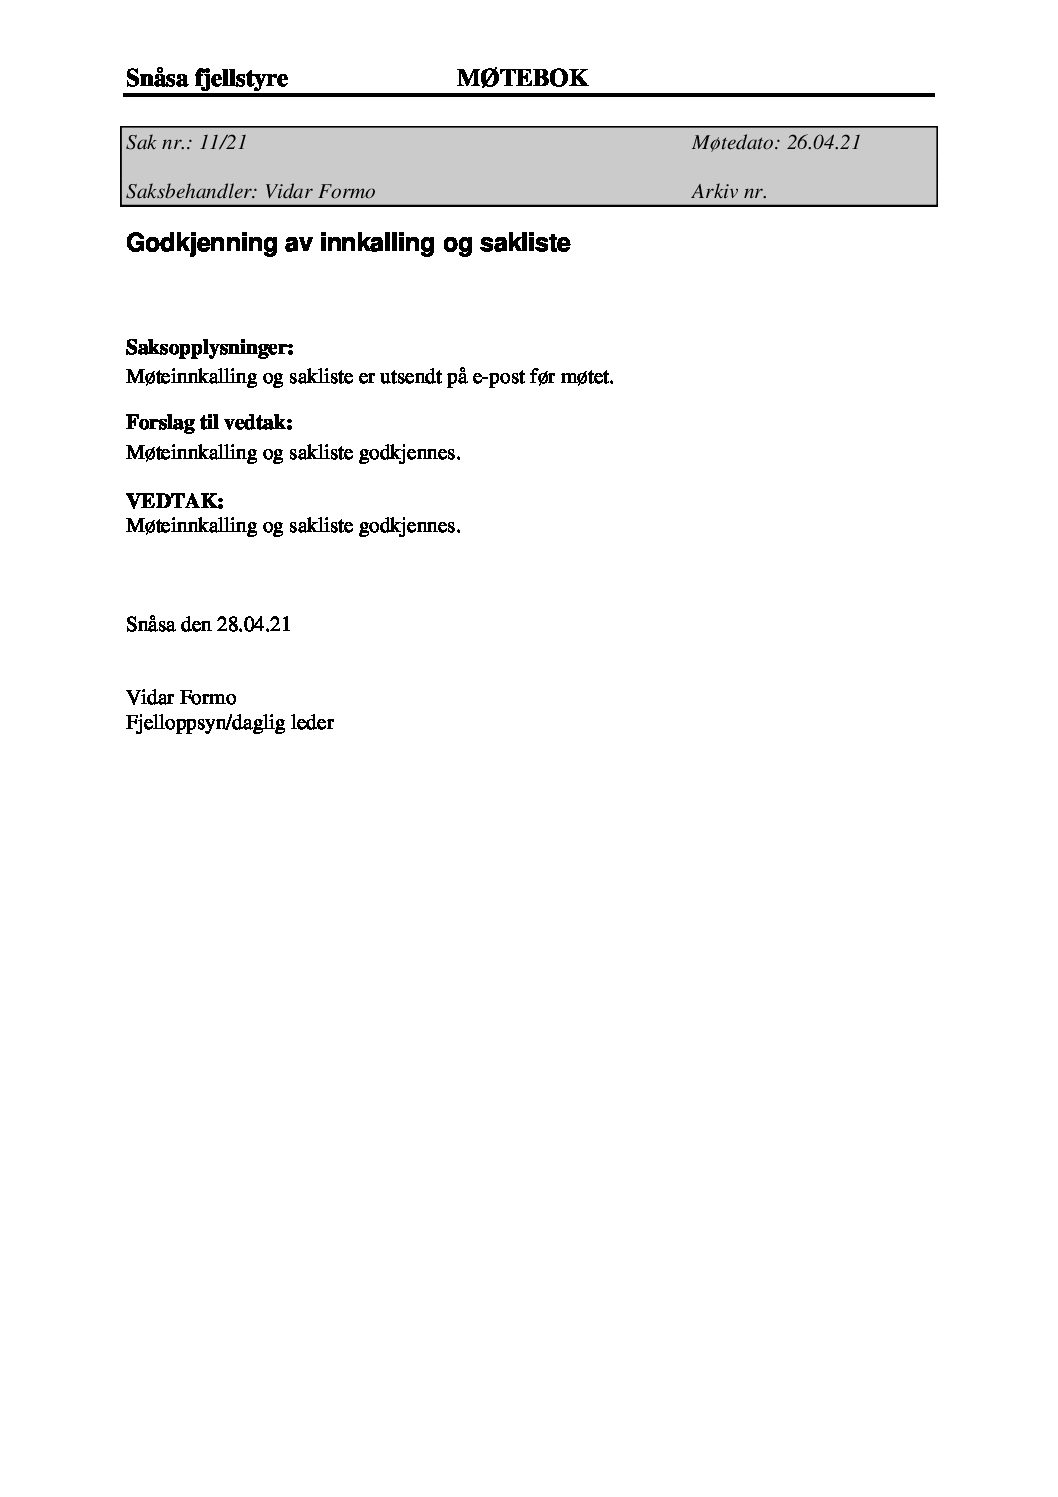 motereferat-snasa-fjellstyre-26-04-21-pdf.jpg